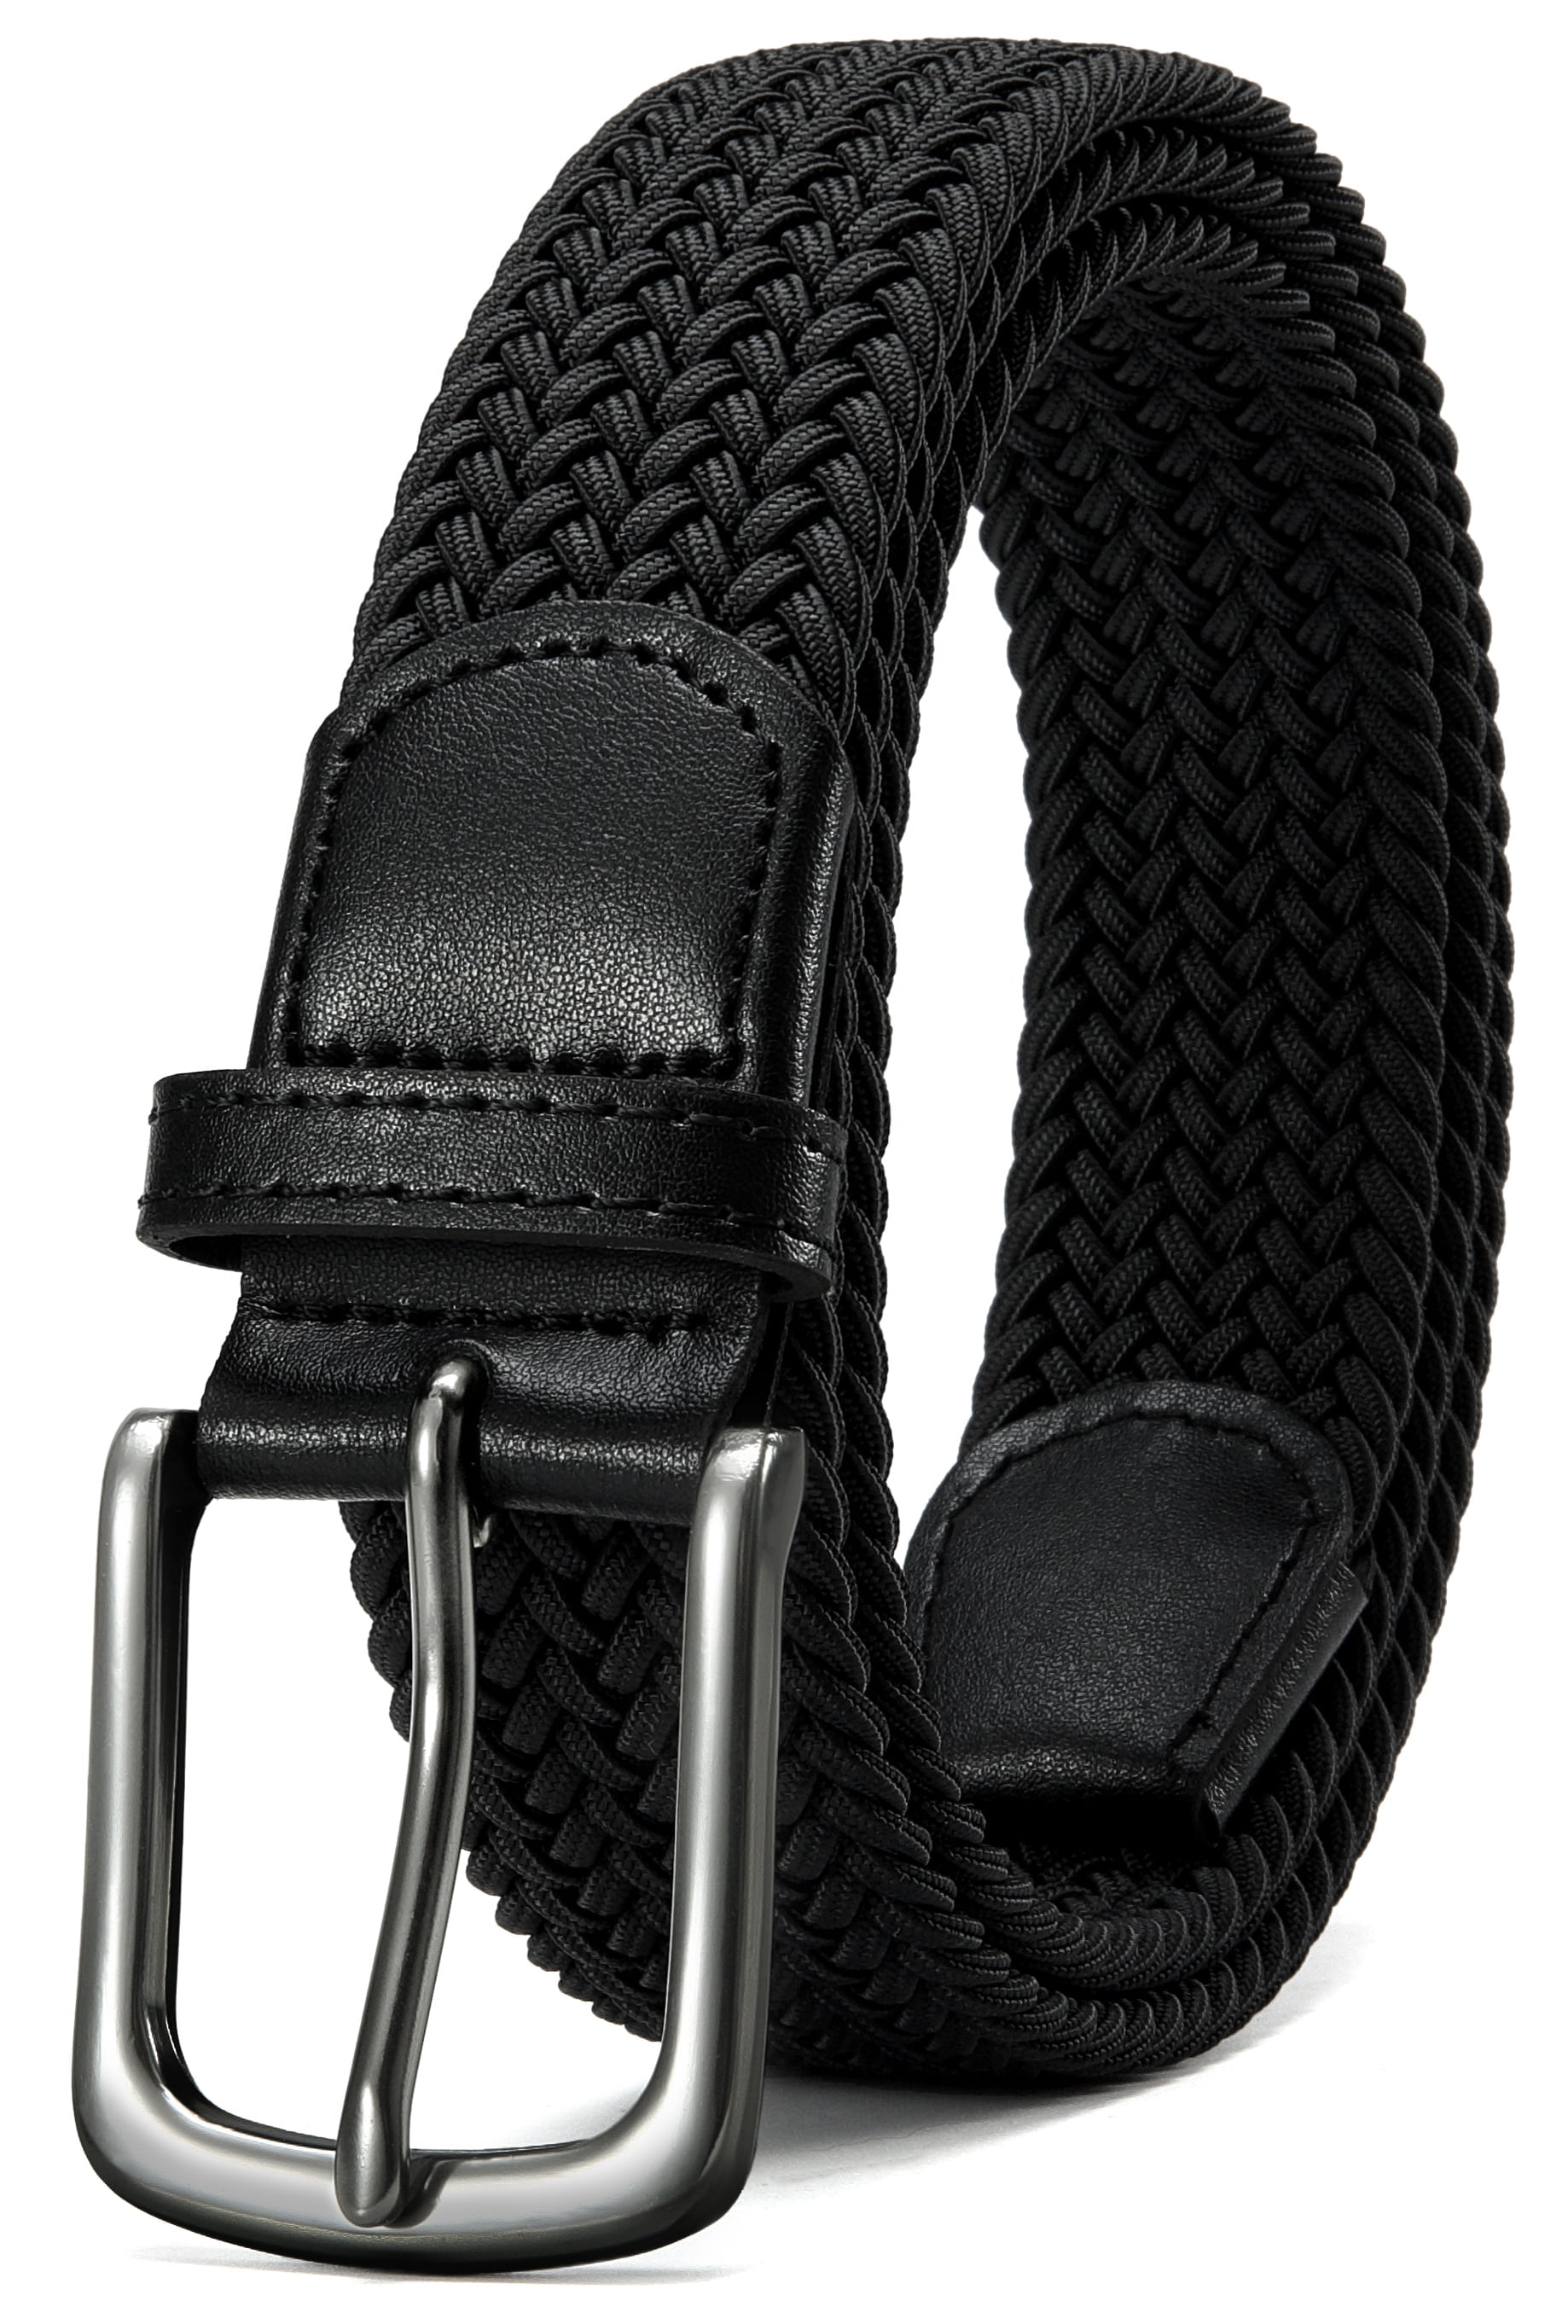 YOETEY Elastic Braided Woven Belt 1 3/8, Stretch Belts for Men